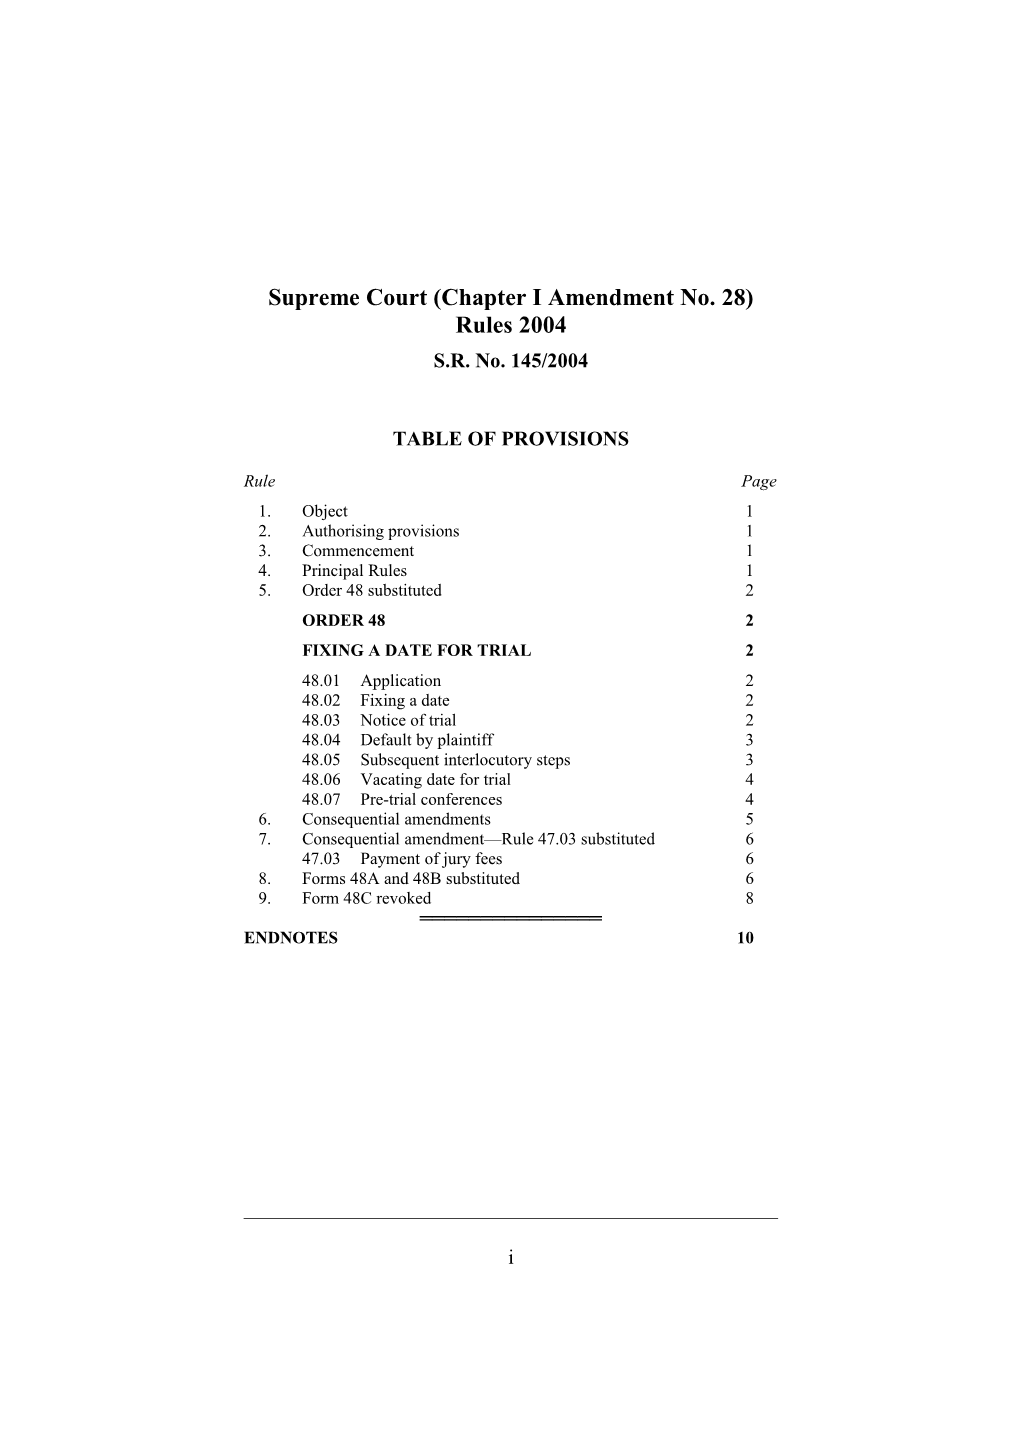 Supreme Court (Chapter I Amendment No. 28) Rules 2004